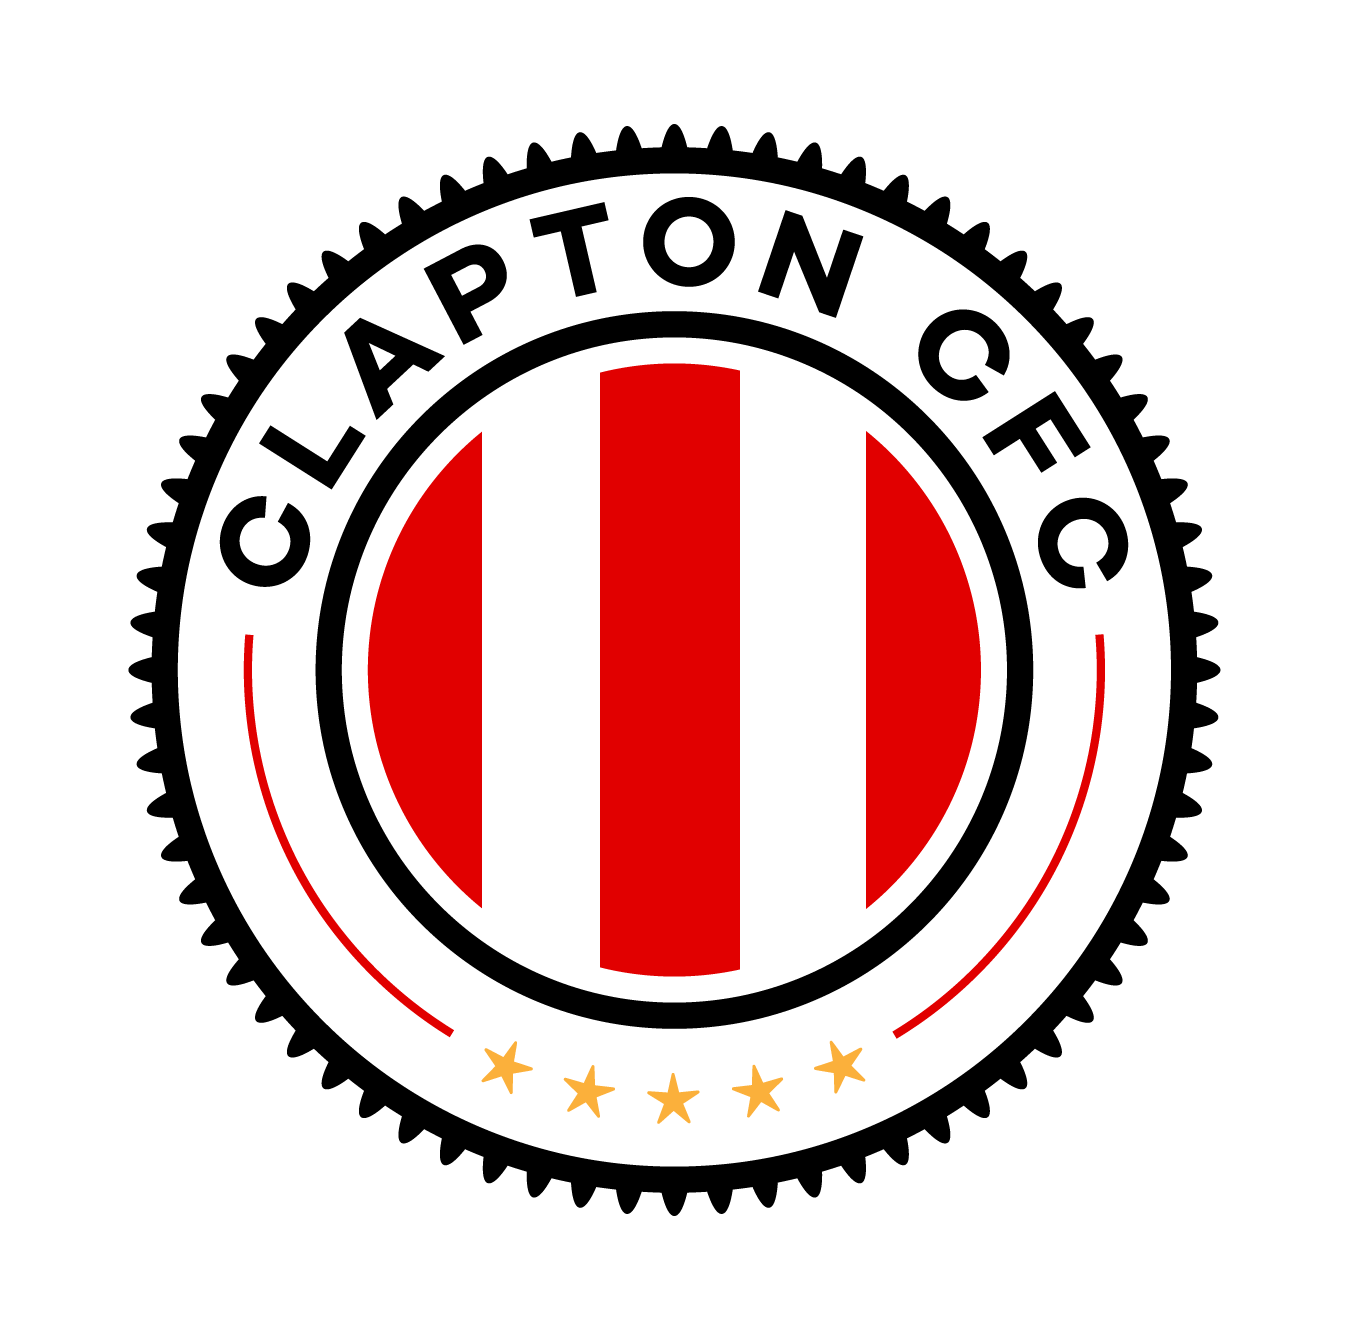 Clapton Community FC